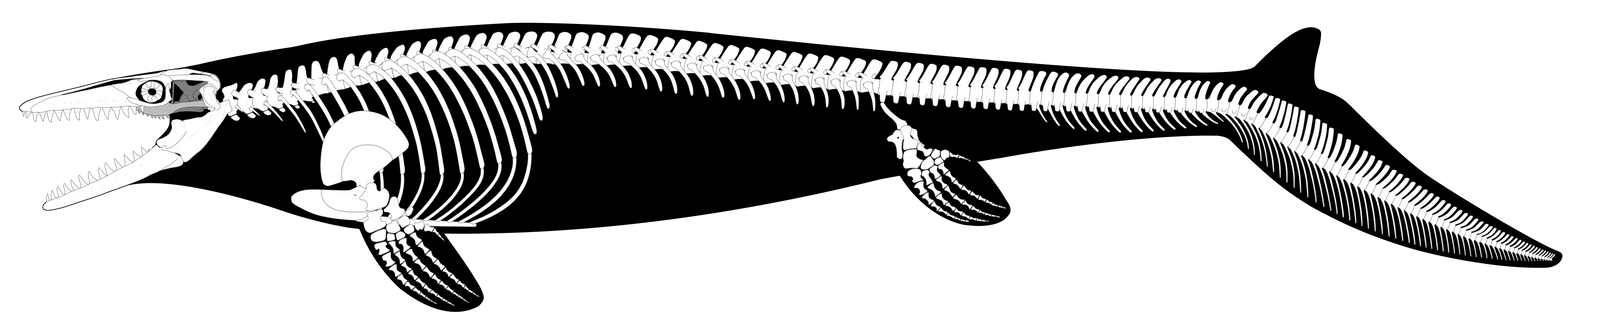 Mosasaurus hoffmannii Reconstruction (UPDATED)